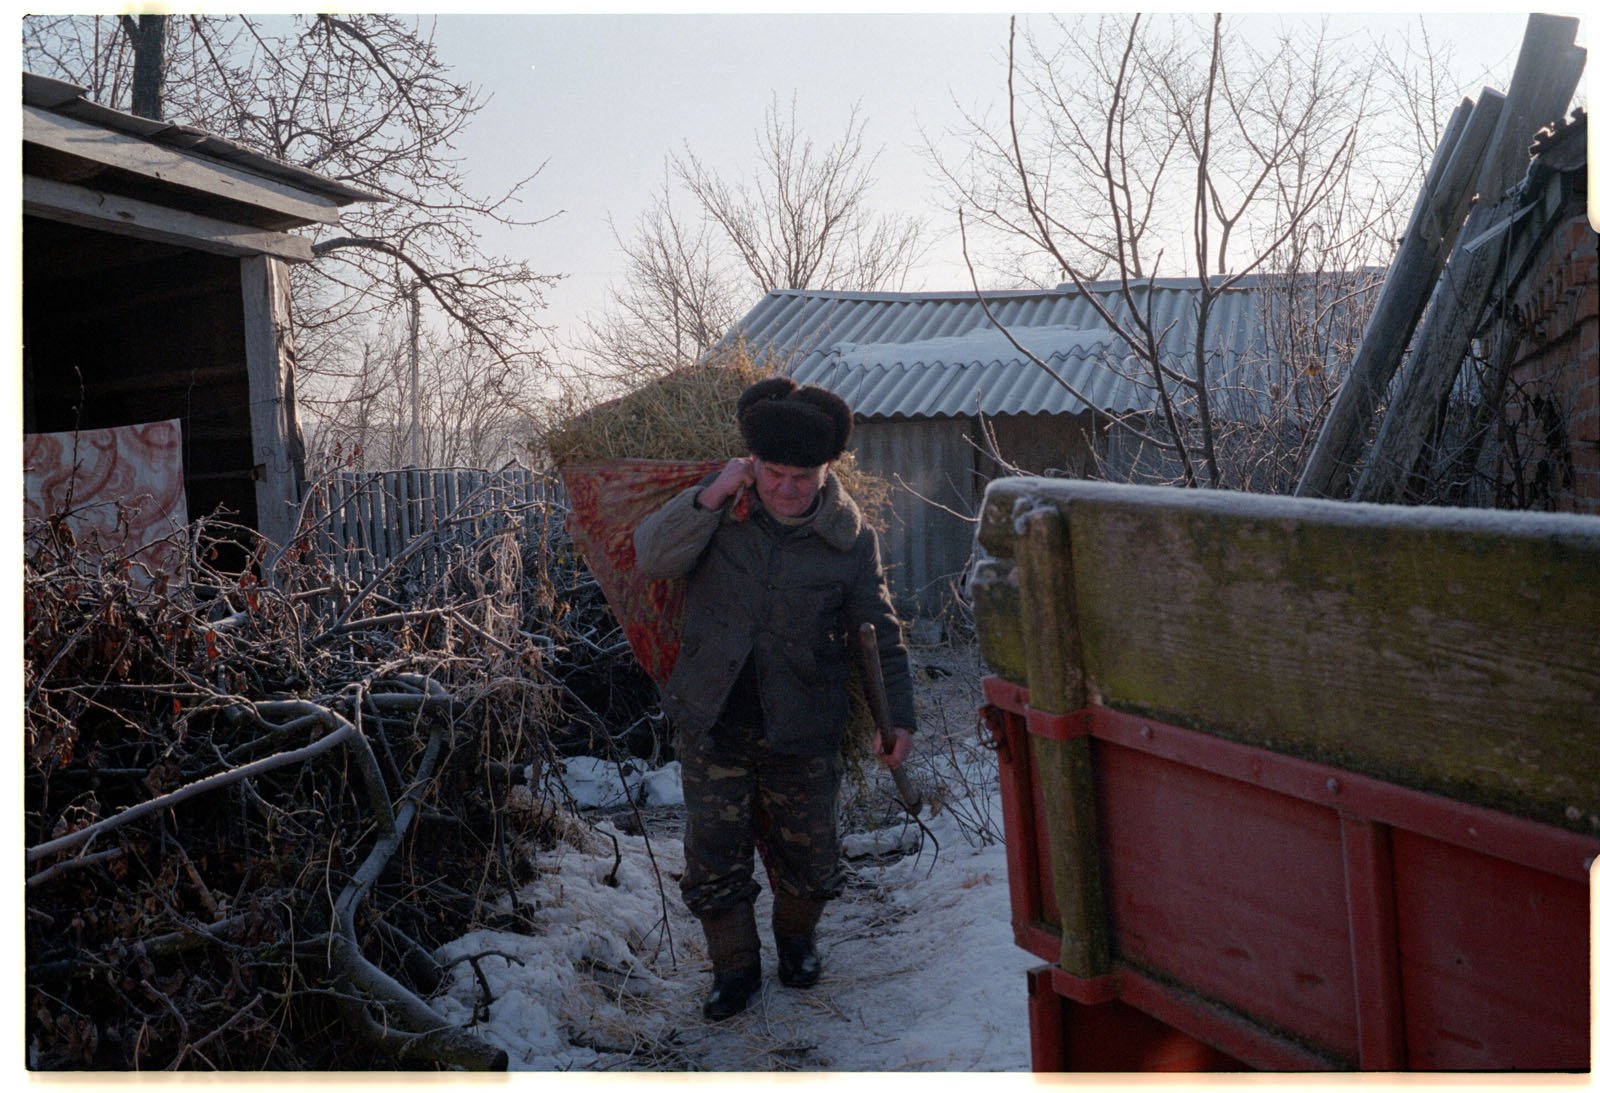 Aleksandr Gordiychuk, the nomadic camera repairman.